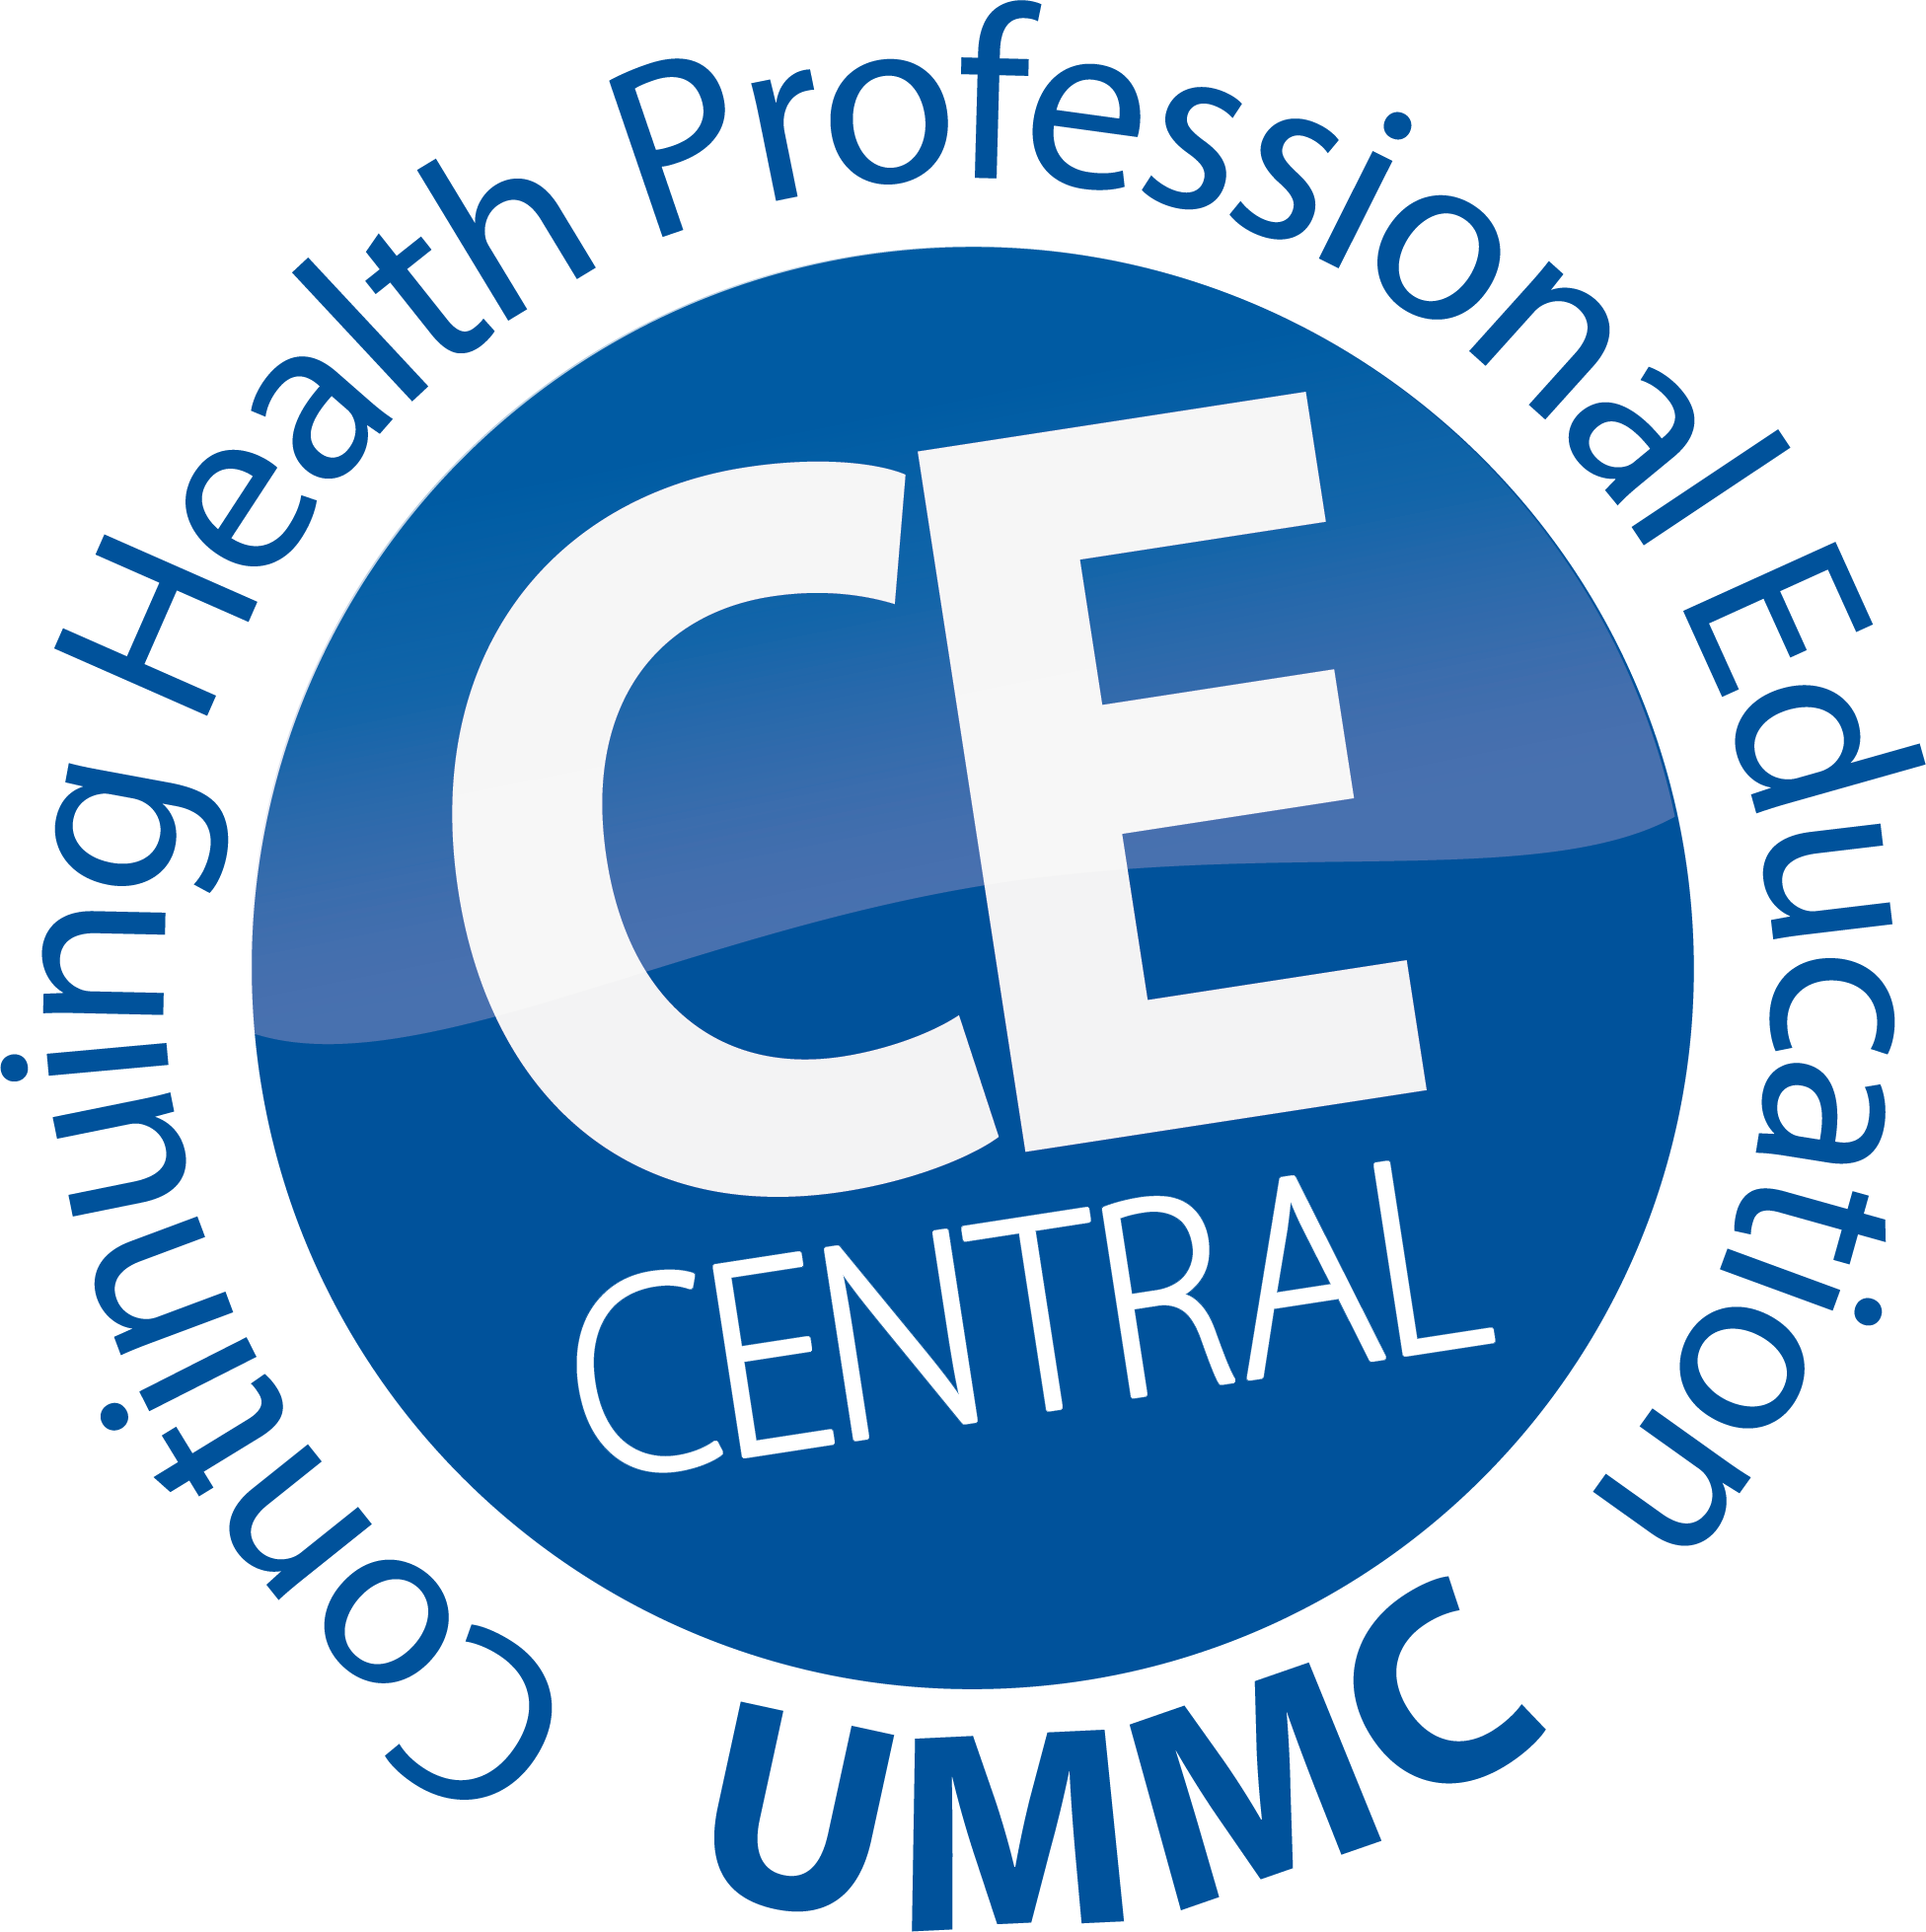 CE Central Continuing Health Professional Education UMMC.